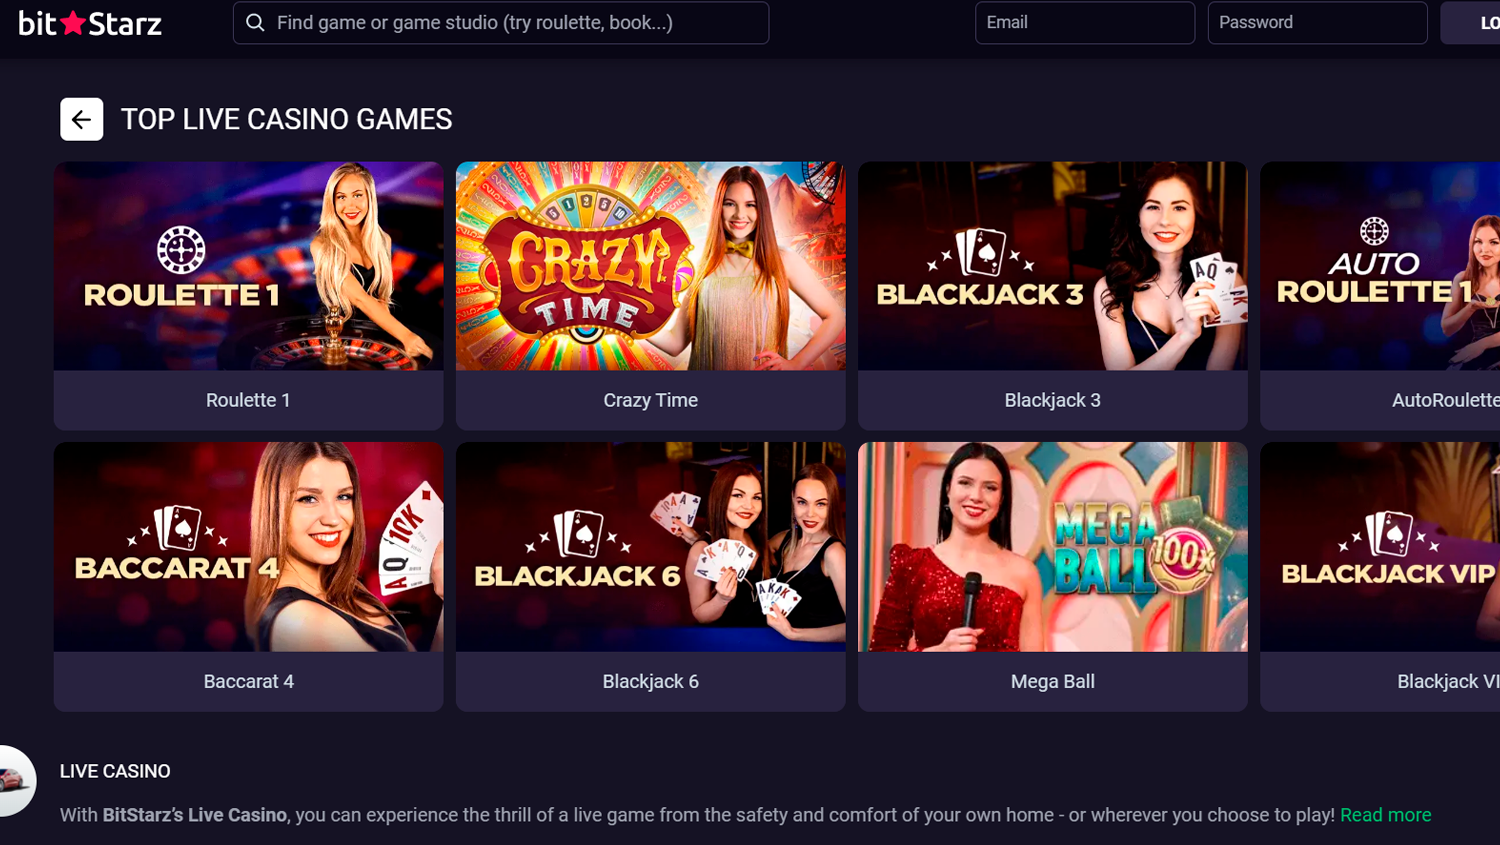 Live casino category on Bitstarz casino website and Bitstarz casino logo